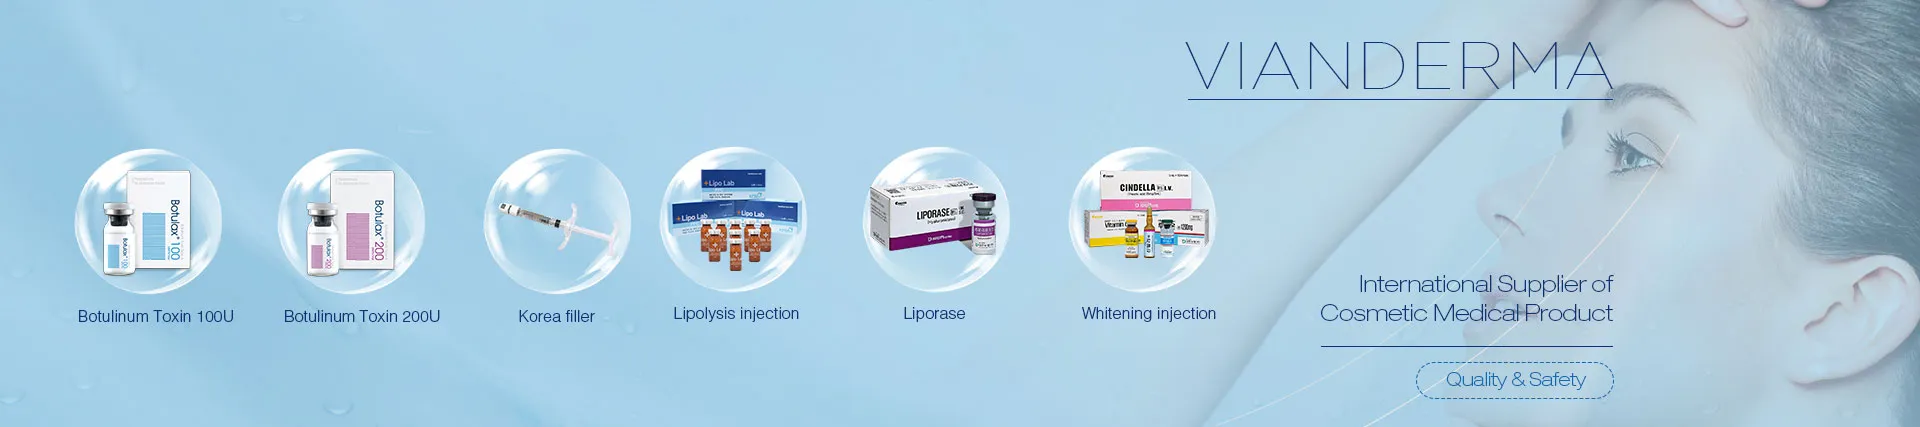 VIANDERMA - International Supplier of Cosmetic Medical Product